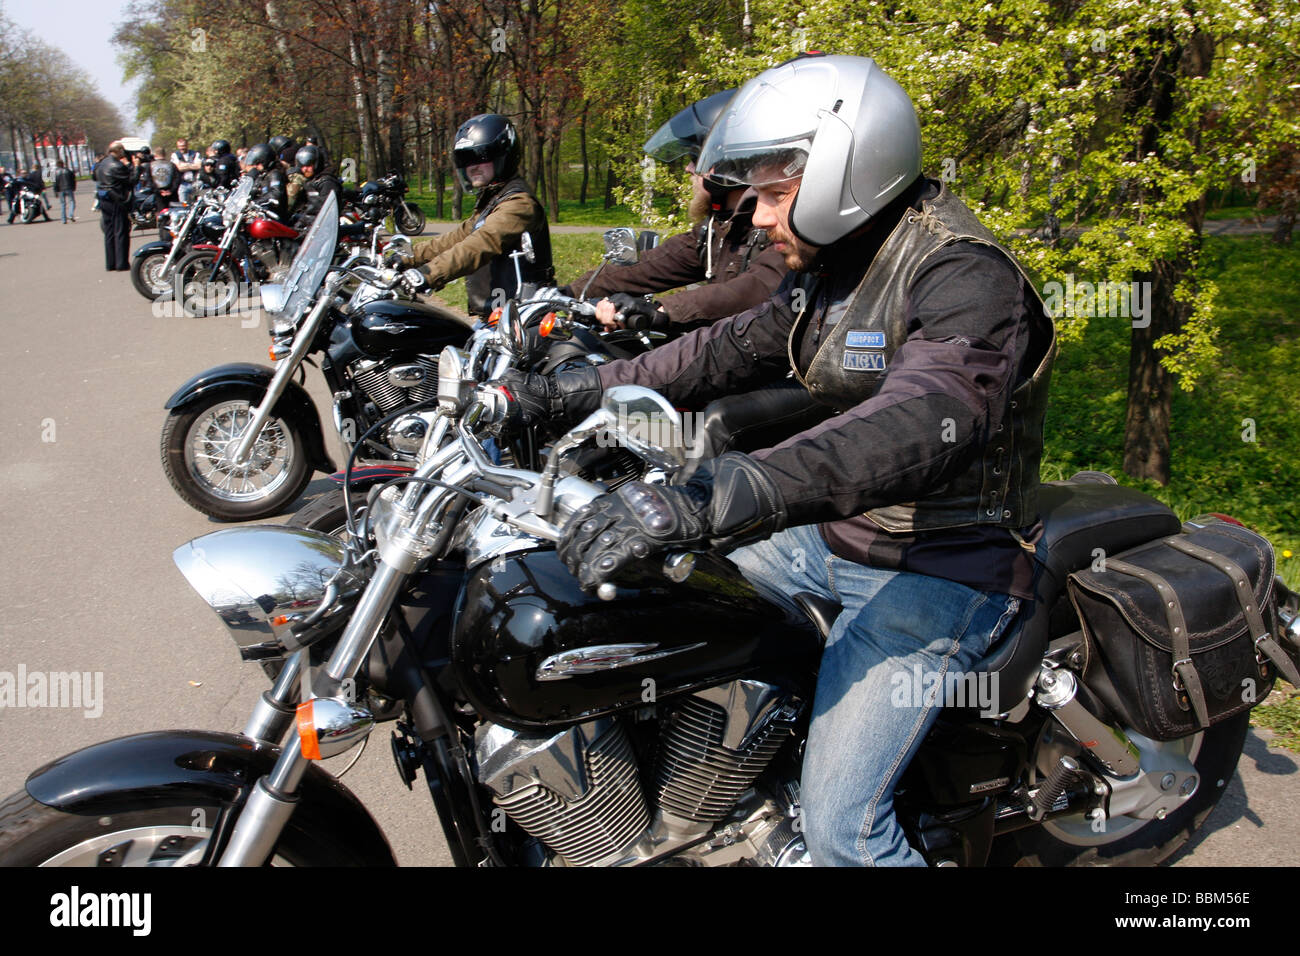 Members of Kyiv Kiev skinhead bikers club meet for the season opening ride in April 2009 Stock Photo